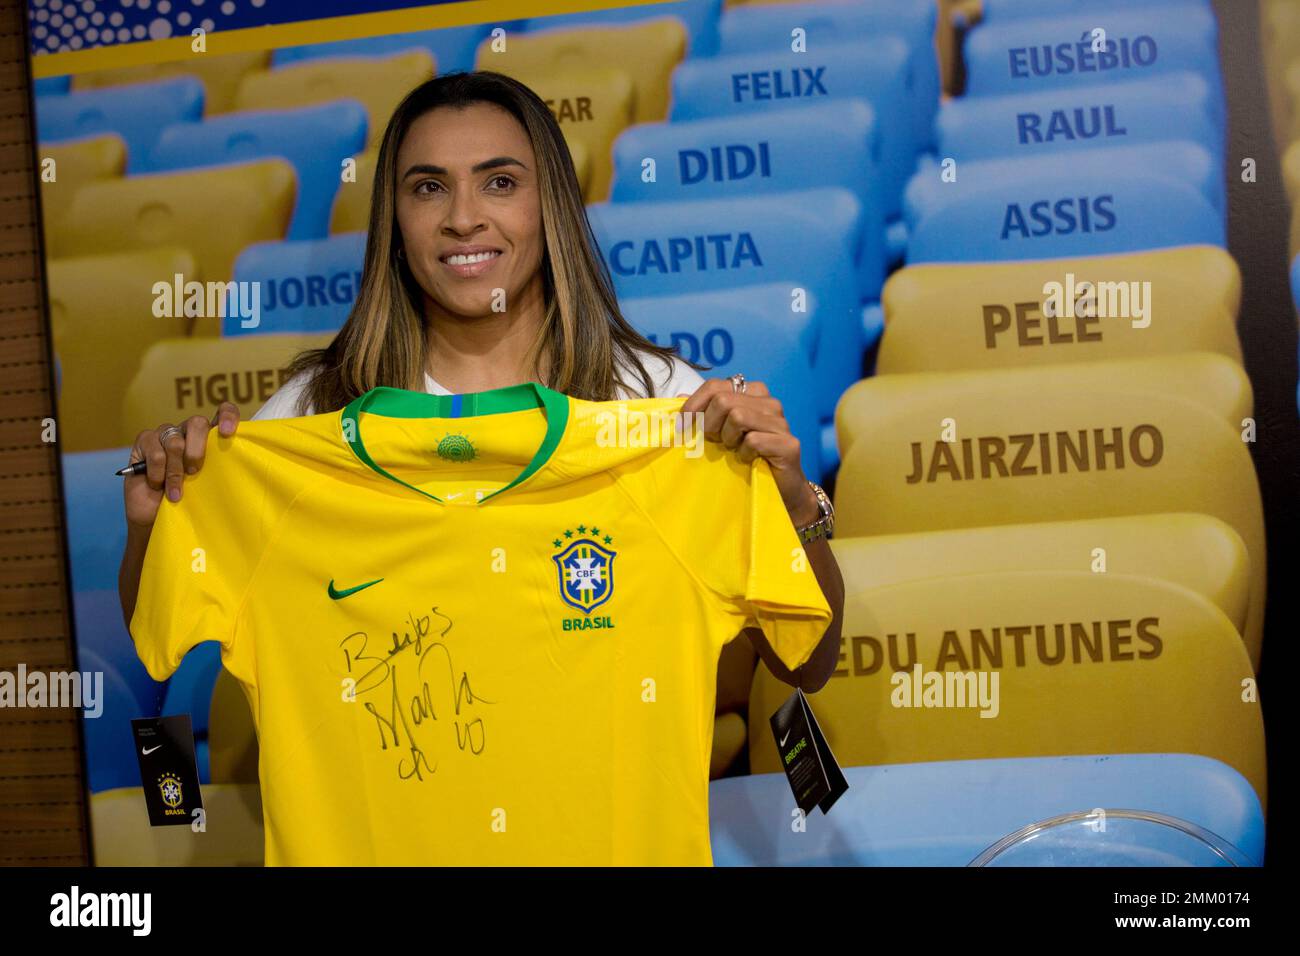 Brazil's Marta holds a Brazil's national jersey before making